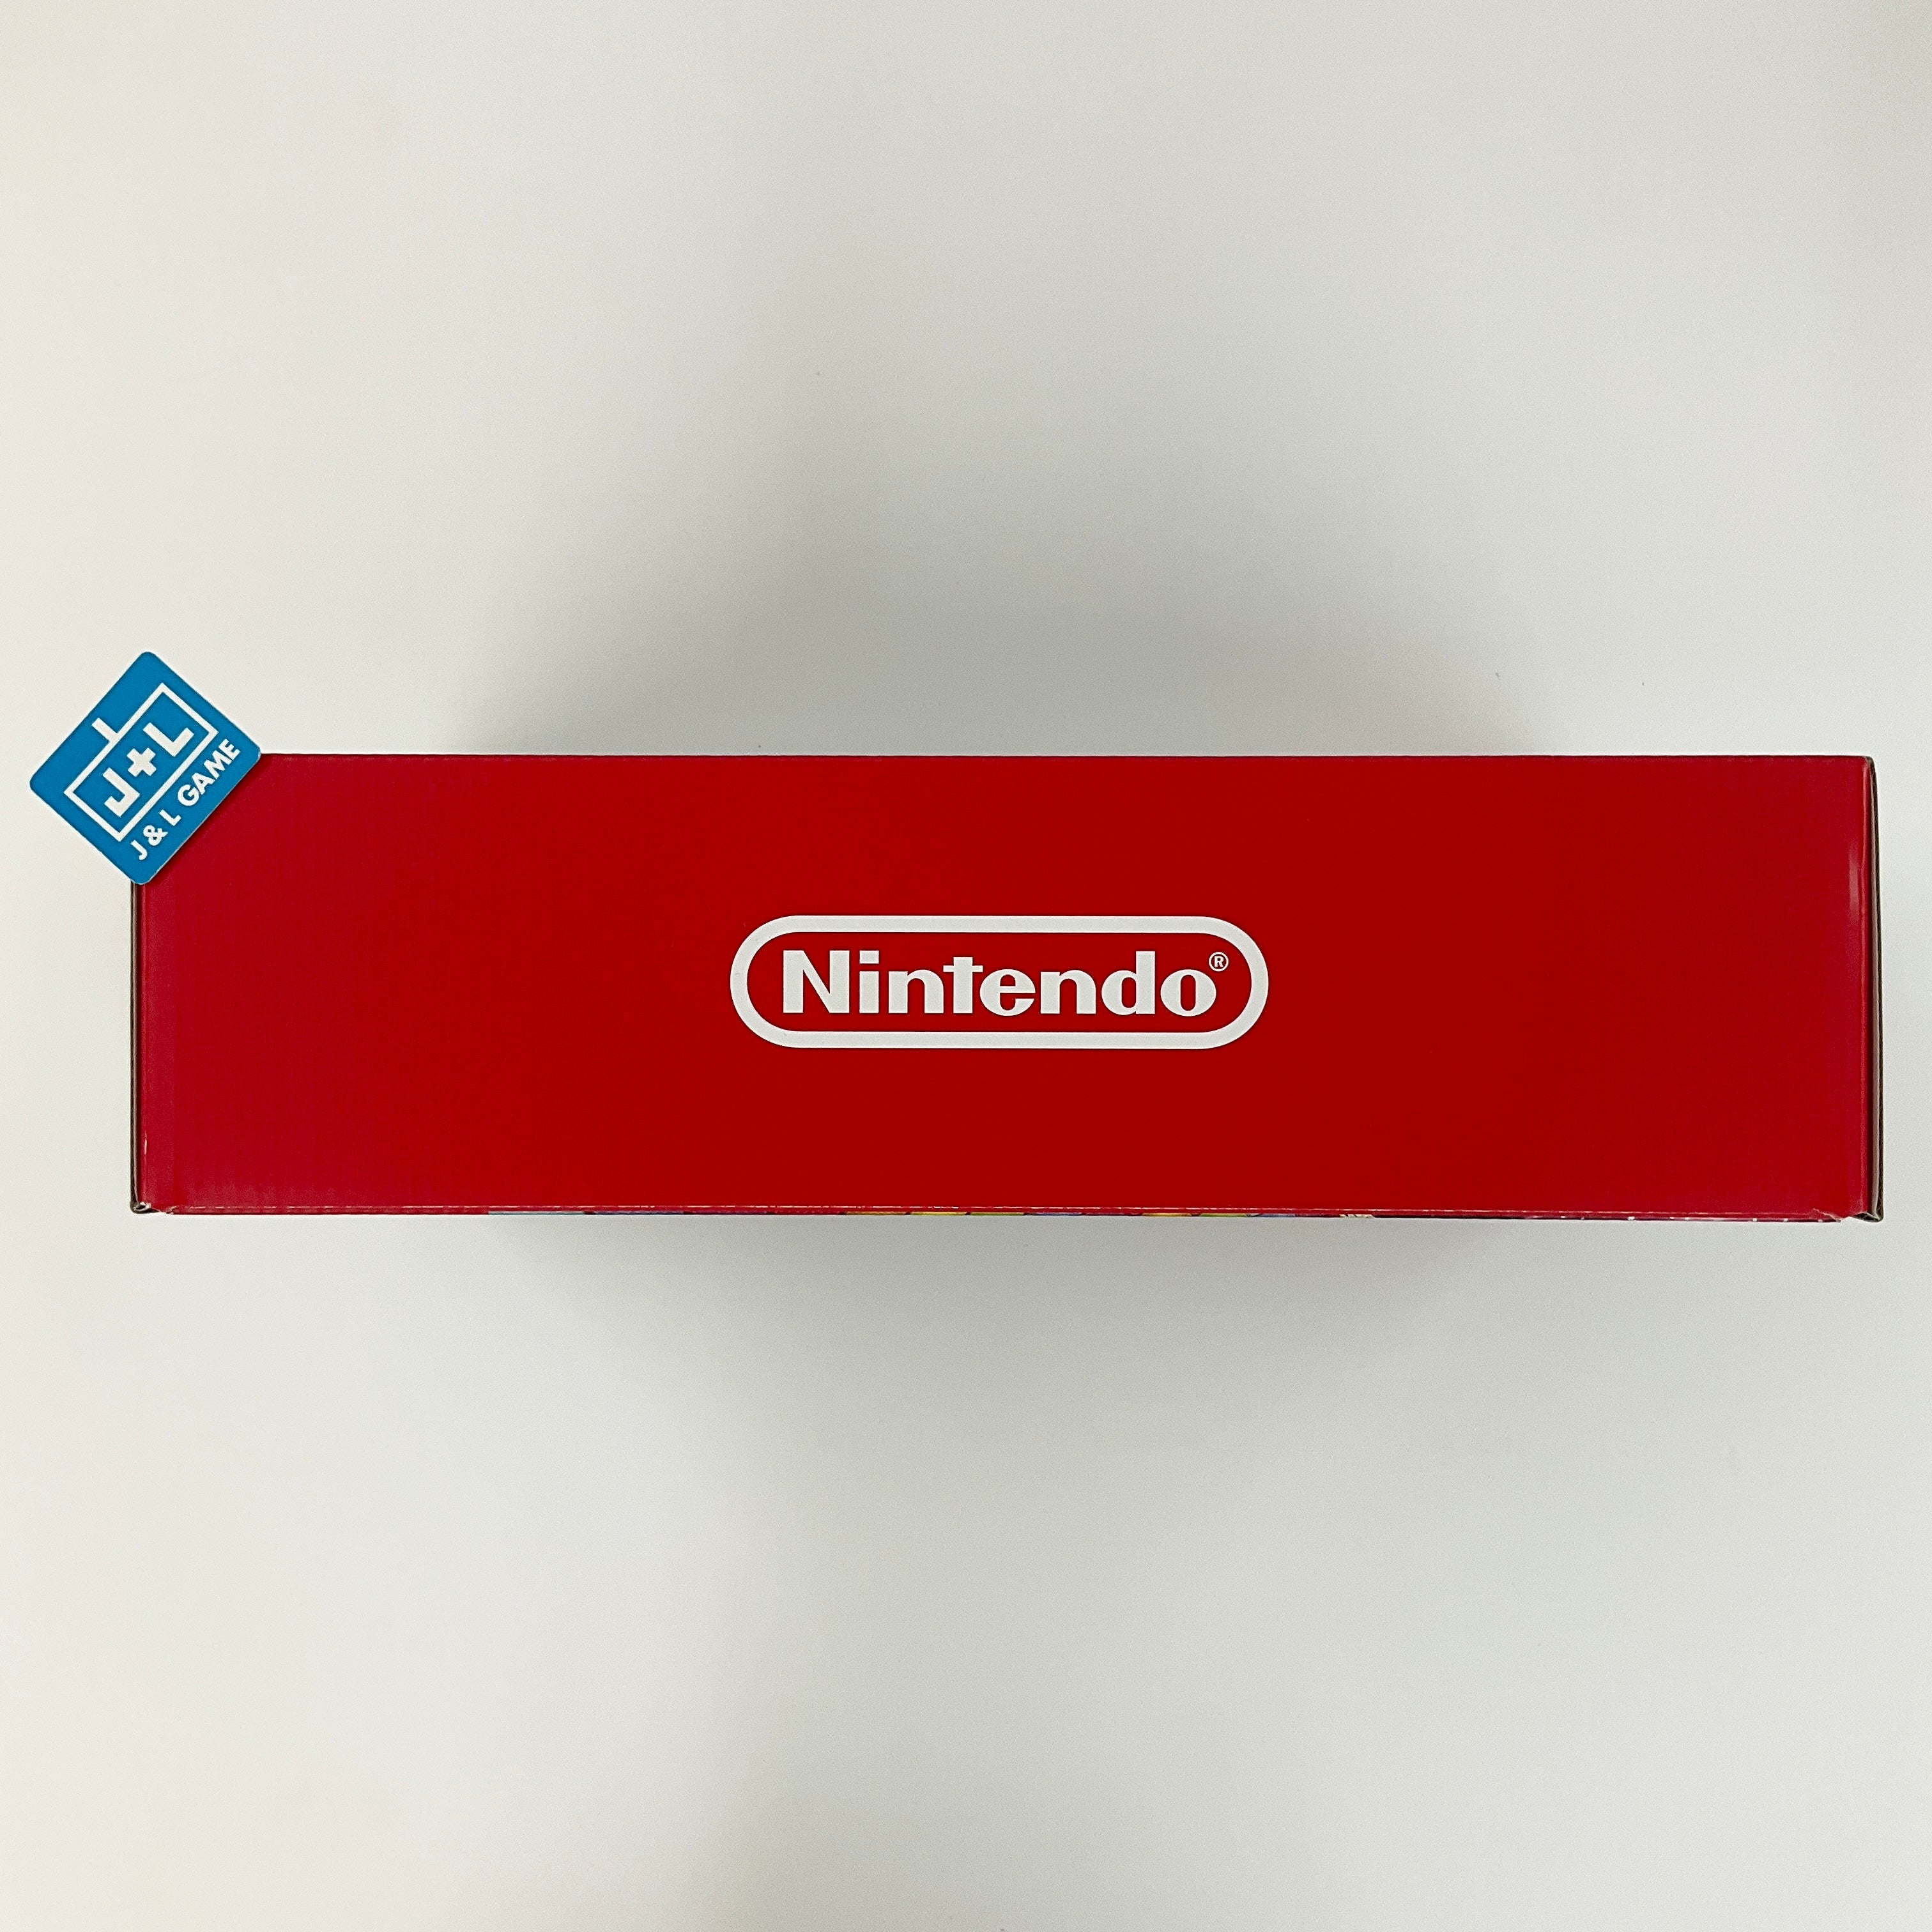 Nintendo Switch w/ Neon Blue & Neon Red Joy-Con + Mario Kart 8 Deluxe (Full Game Download) - Nintendo Switch Consoles Nintendo   